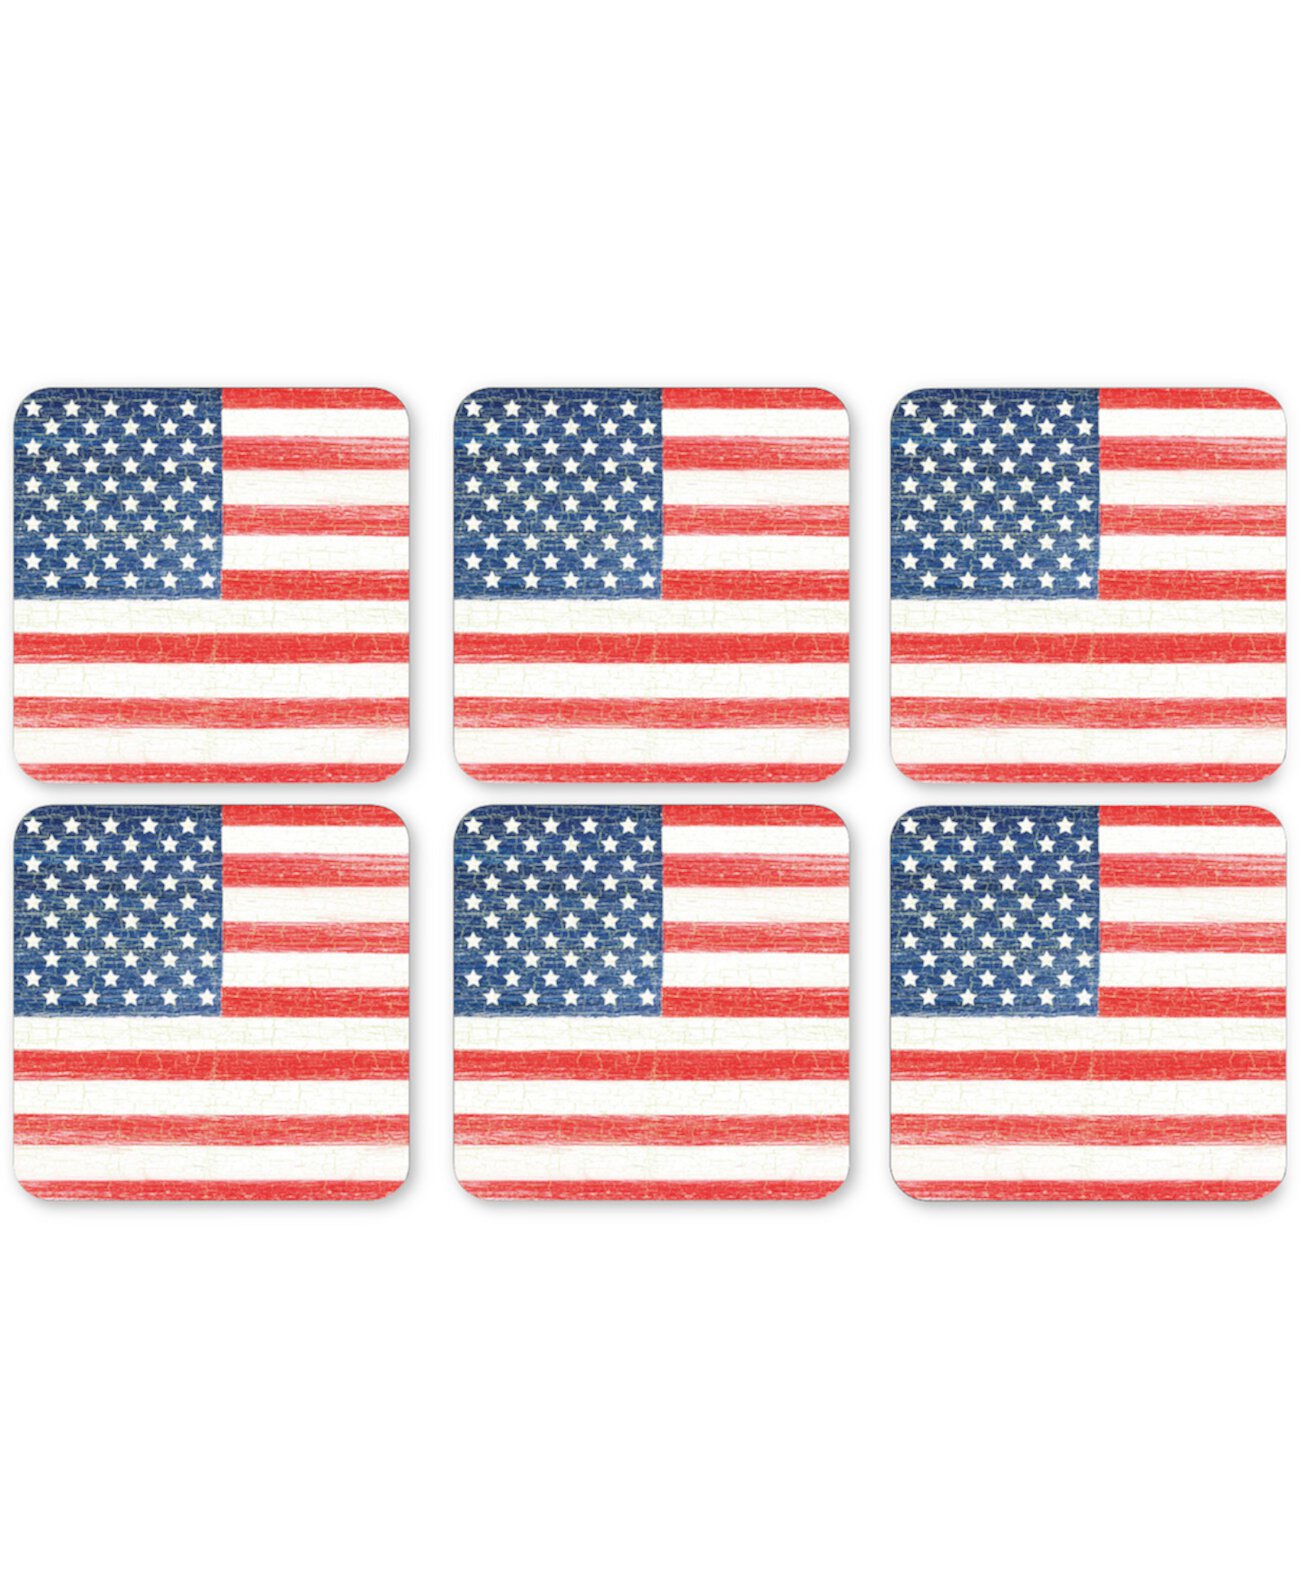 Подставки под американский флаг Pimpernel, набор из 6 шт. Portmeirion